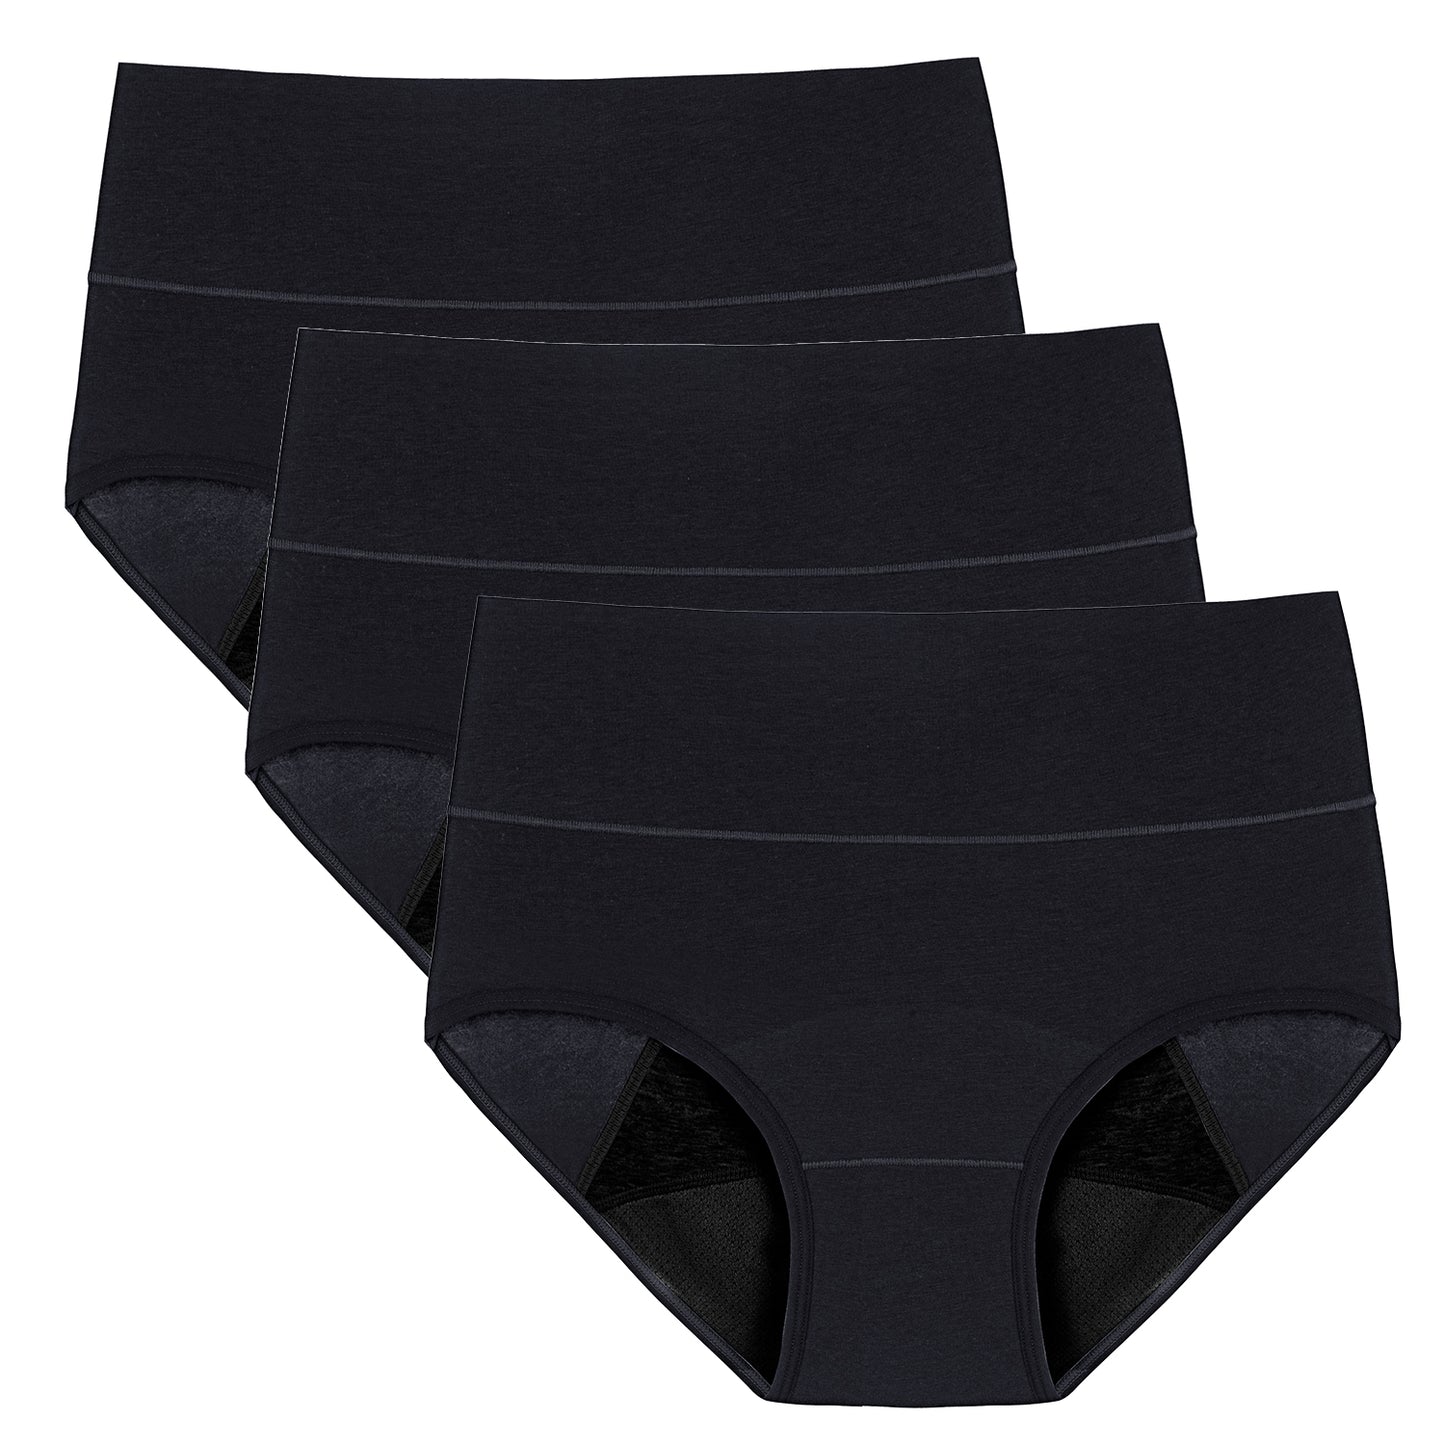 Maytalsory Classic Incontinence Underwear Cotton Briefs Shorts